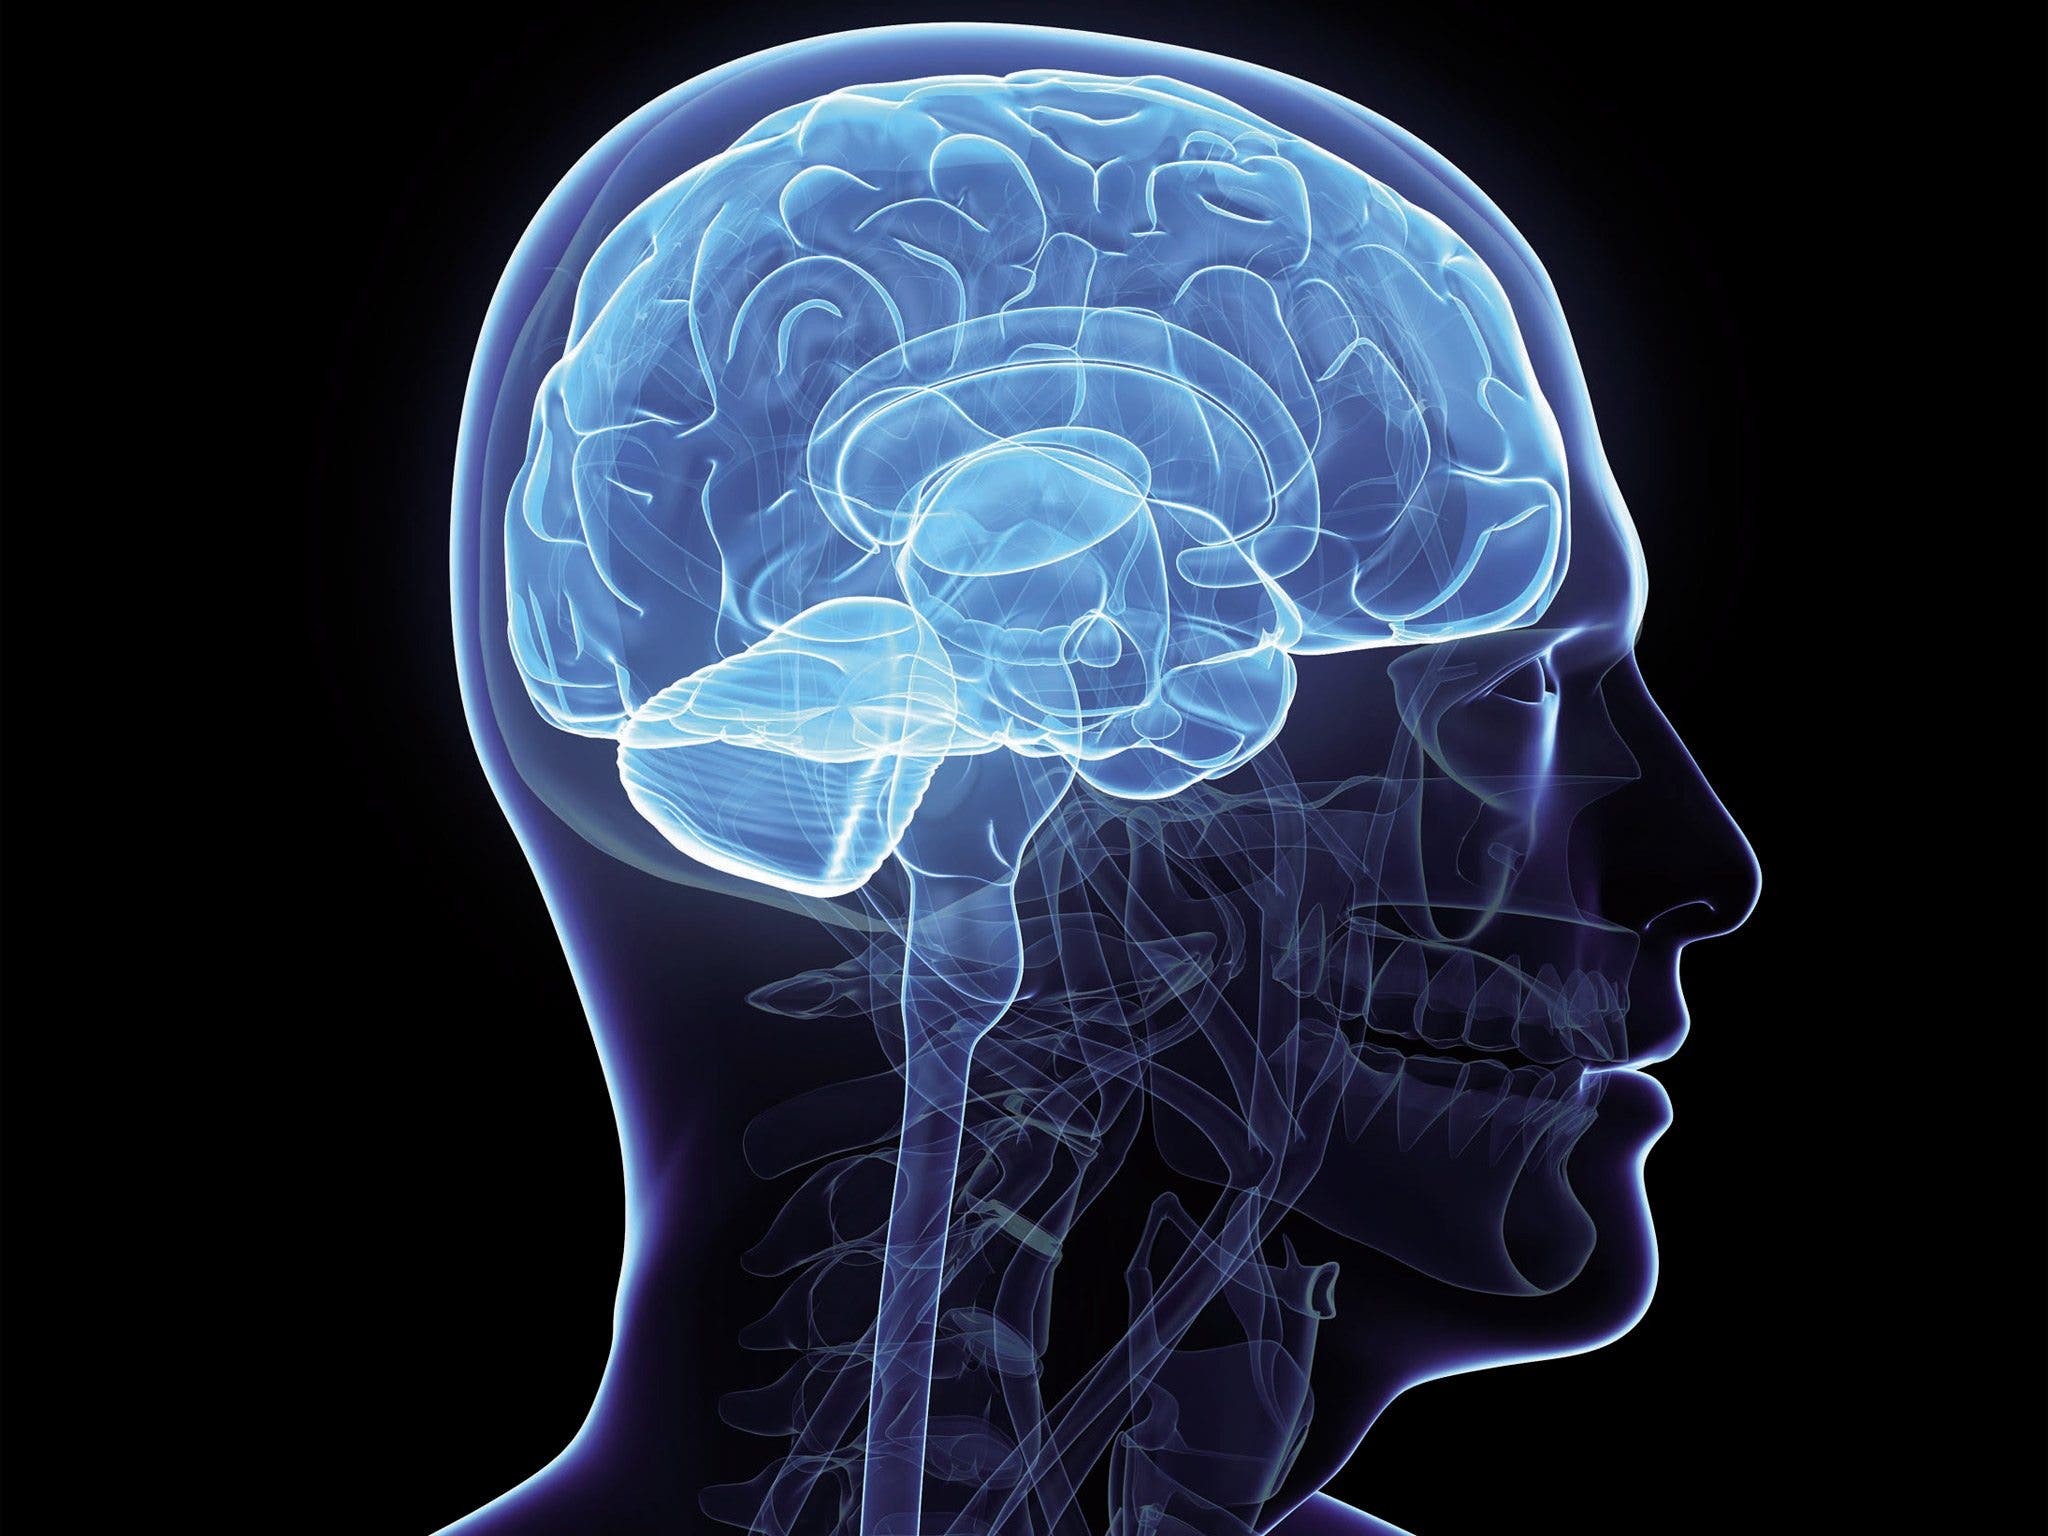 R brain. Изображение мозга человека. Человеческий мозг картинки.